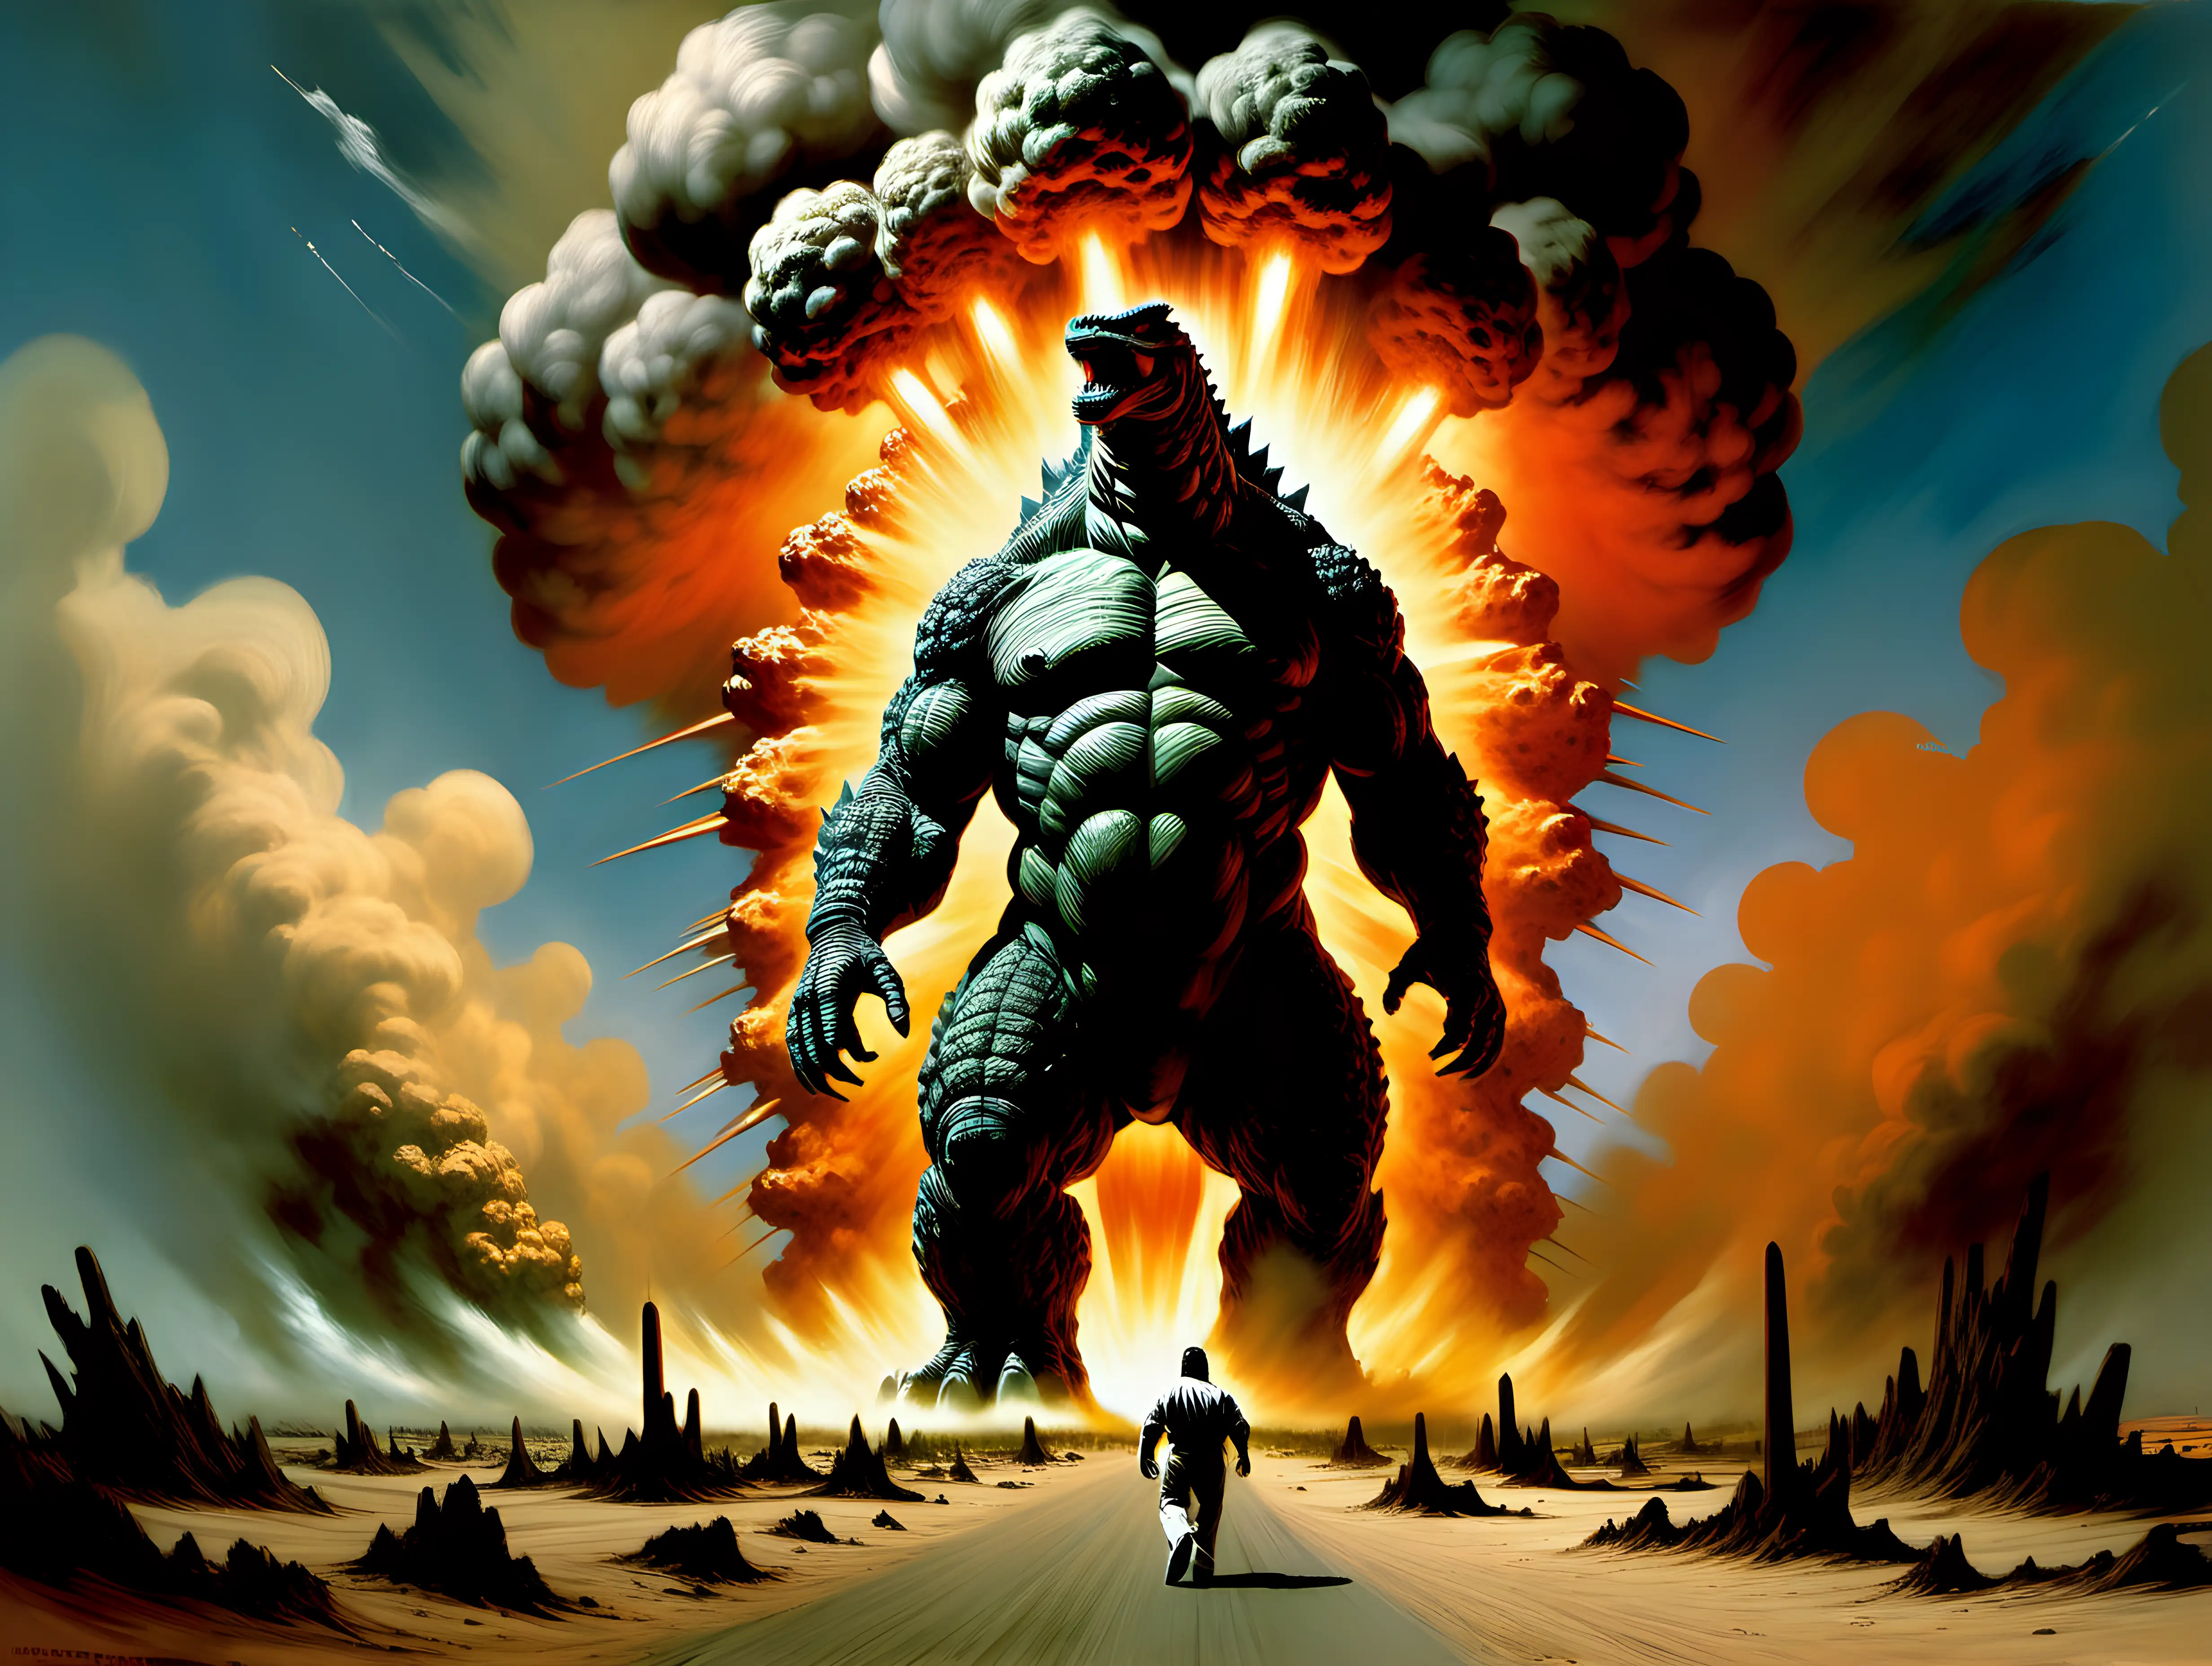 Majestic Godzilla Strolls Amidst a Nuclear Inferno in FrazettaInspired Masterpiece